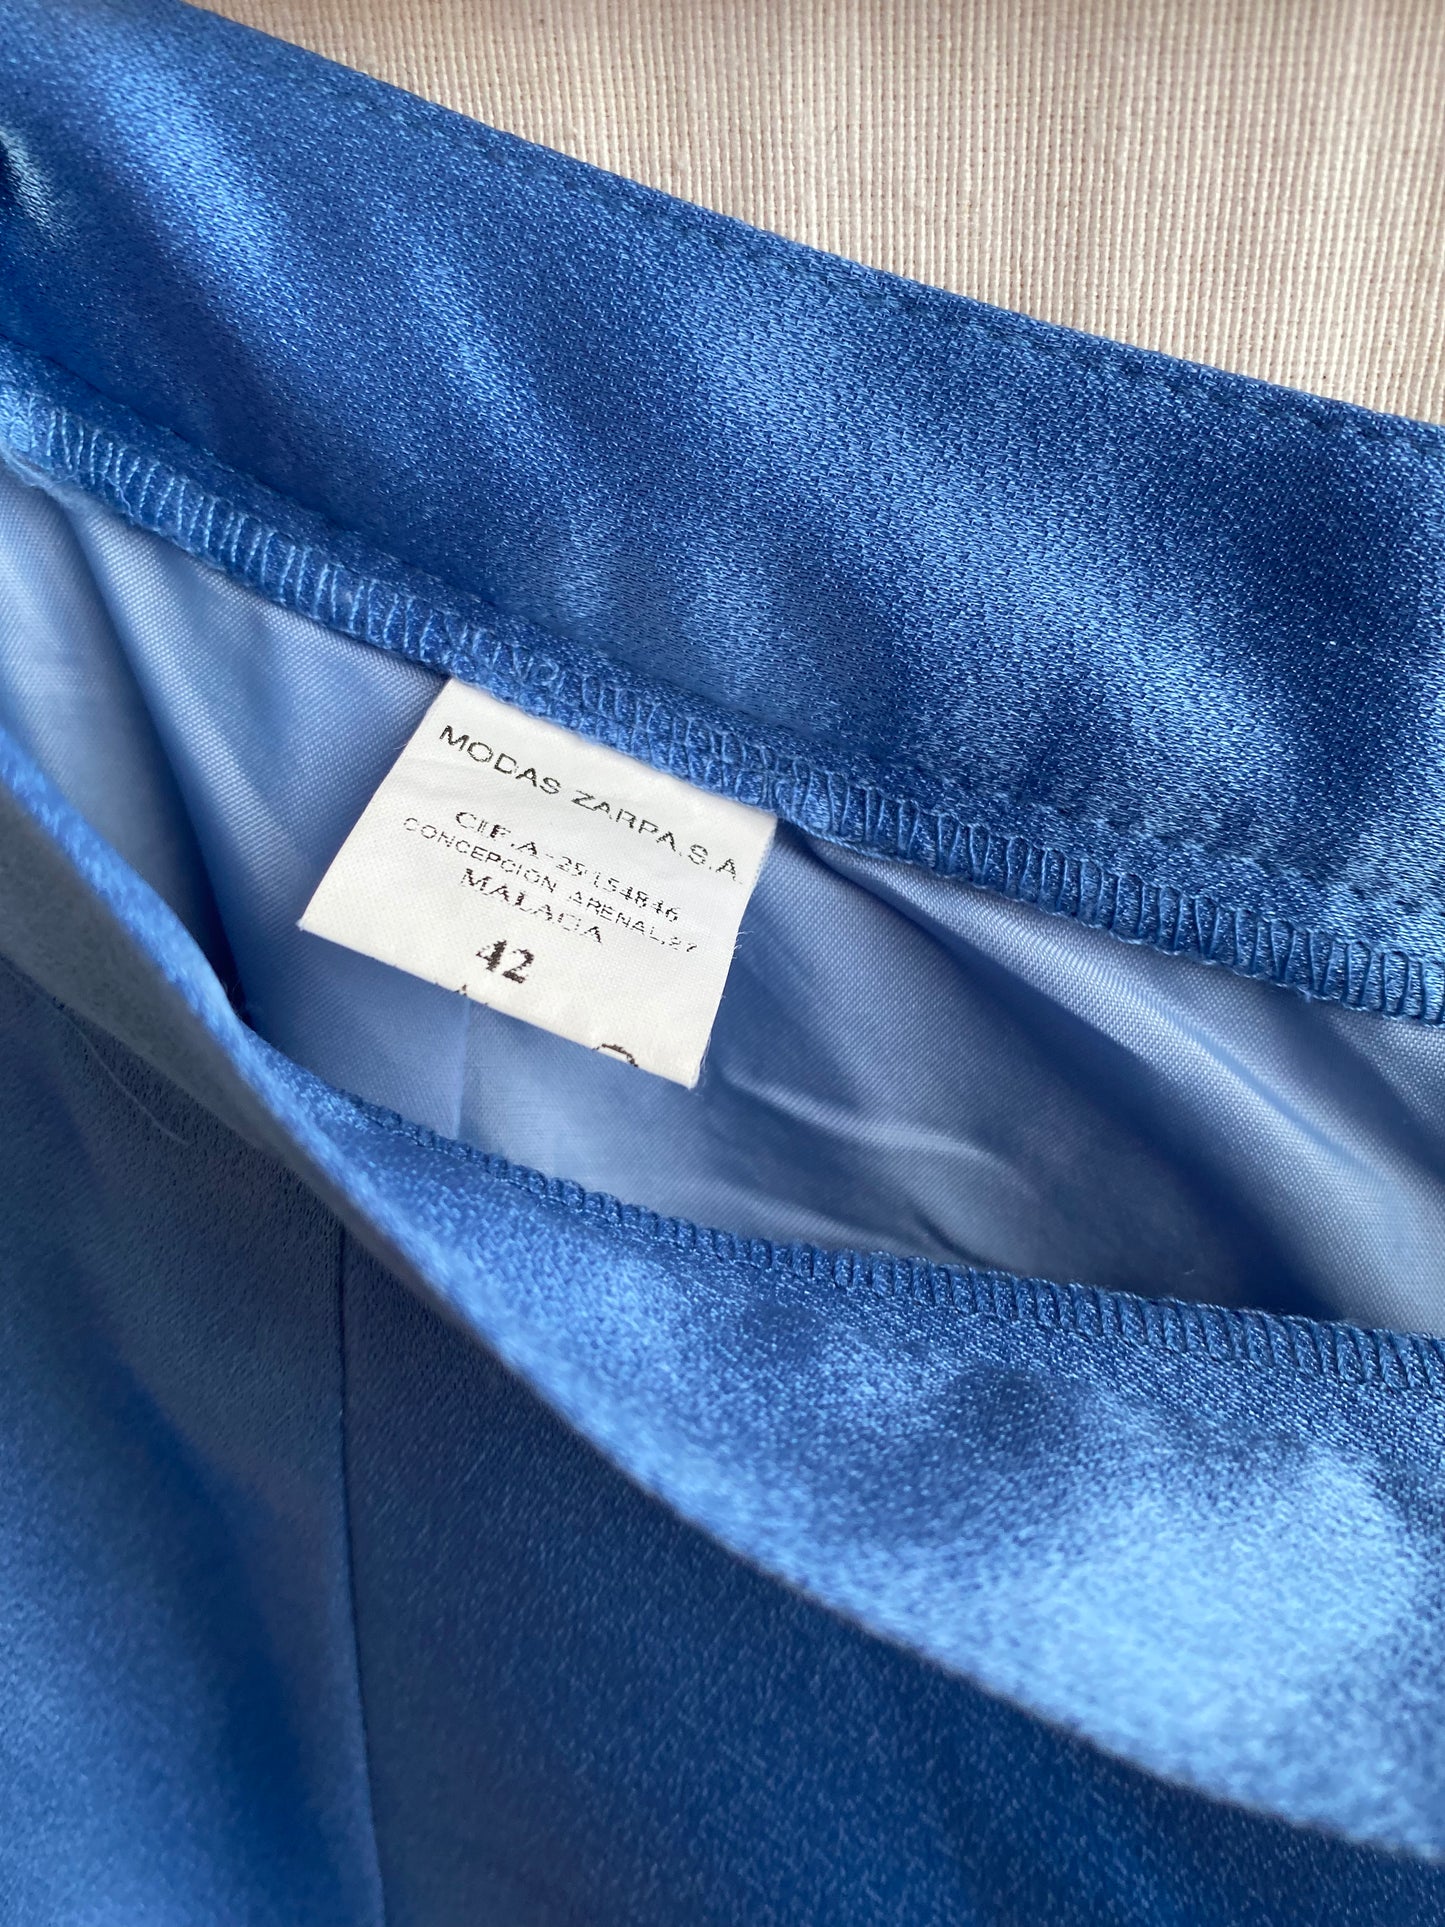 Falda azul vintage satén